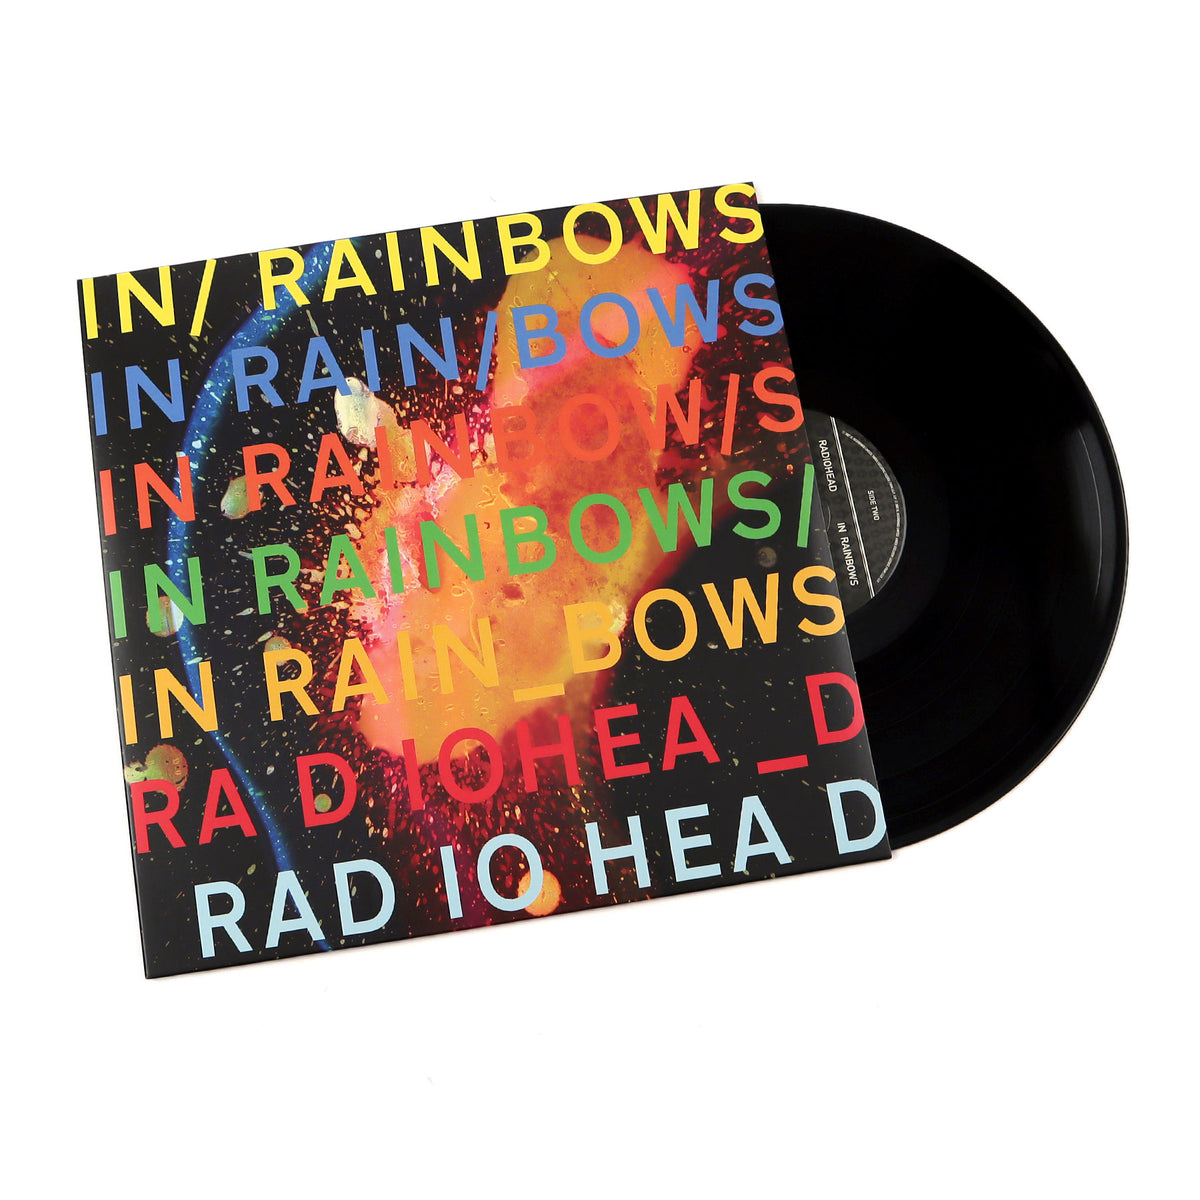 Radiohead Vinyl Records Lps For Sale - Crazy For Vinyl